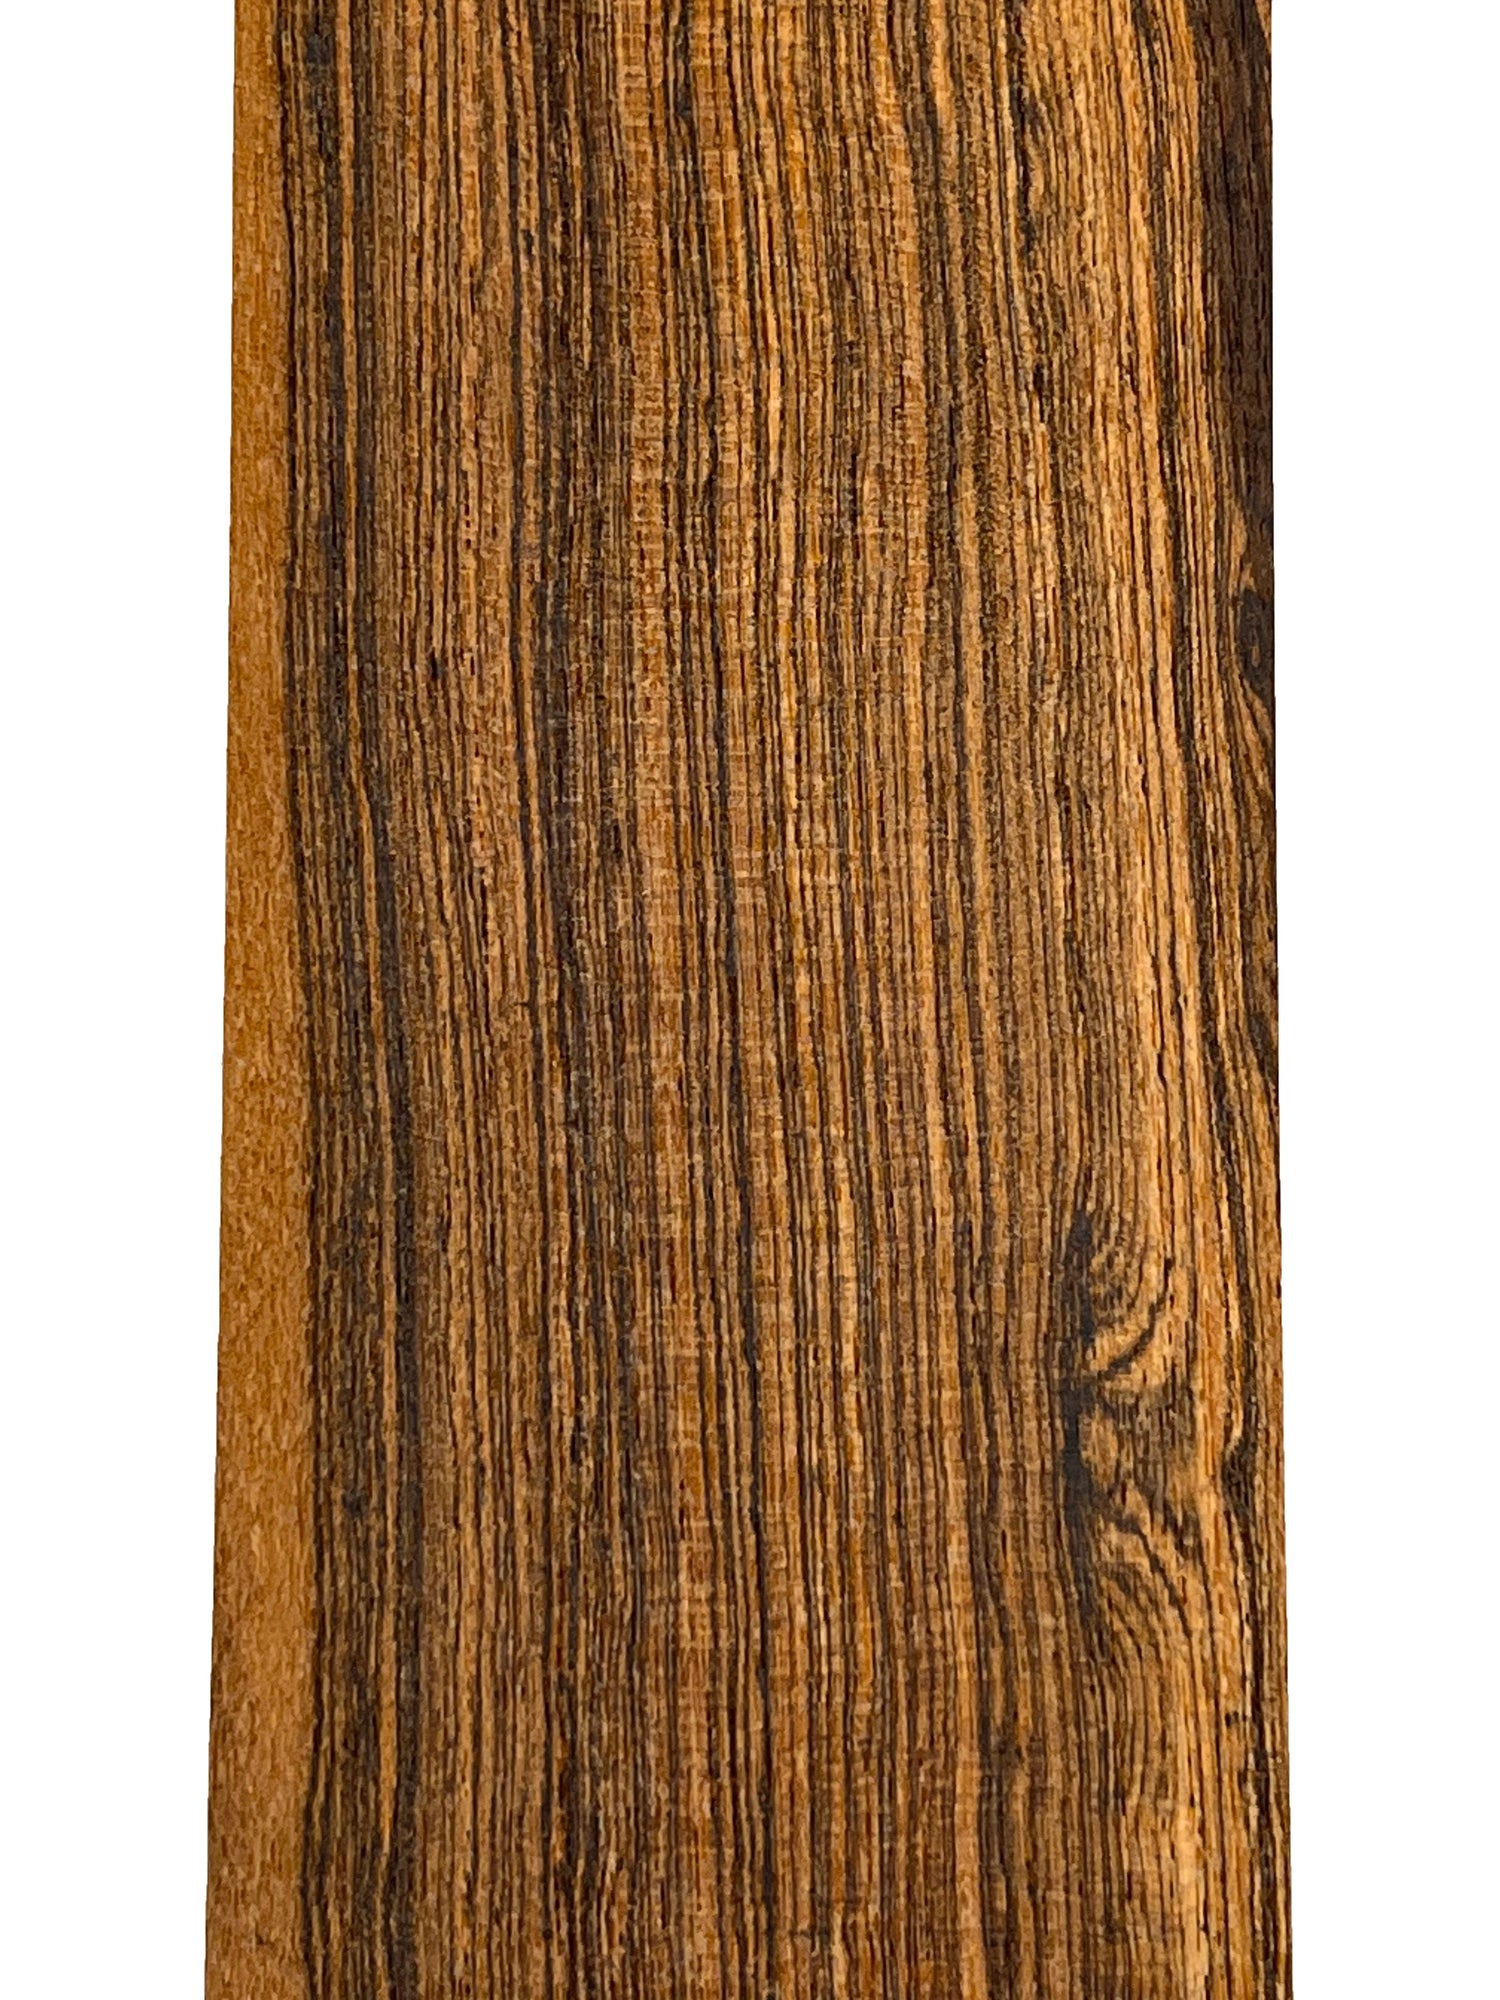 Bocote Guitar Fingerboard Blank - Exotic Wood Zone - Buy online Across USA 